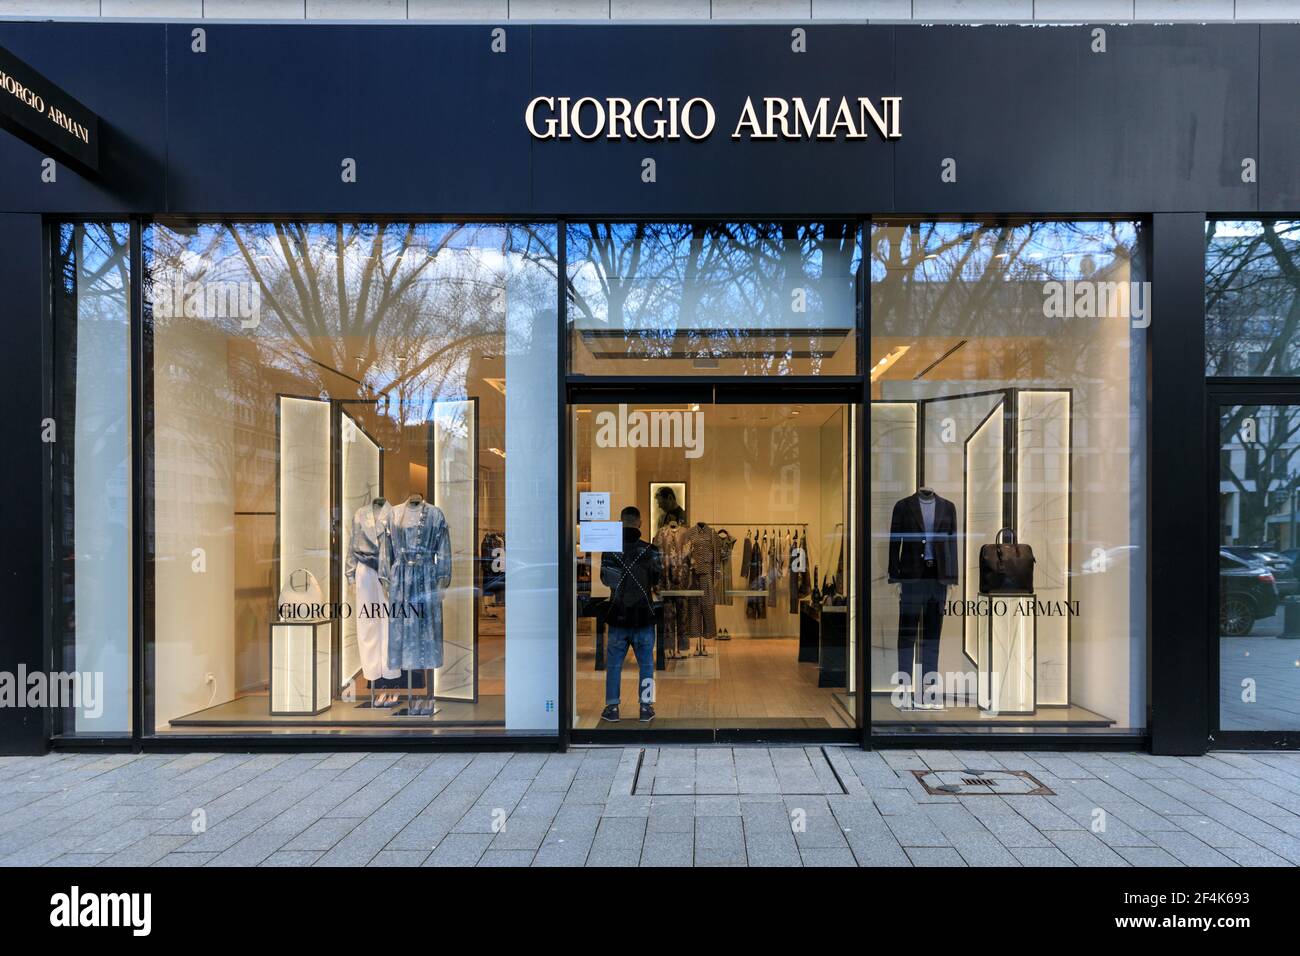 Giorgio armani shop hi-res stock photography and images - Alamy